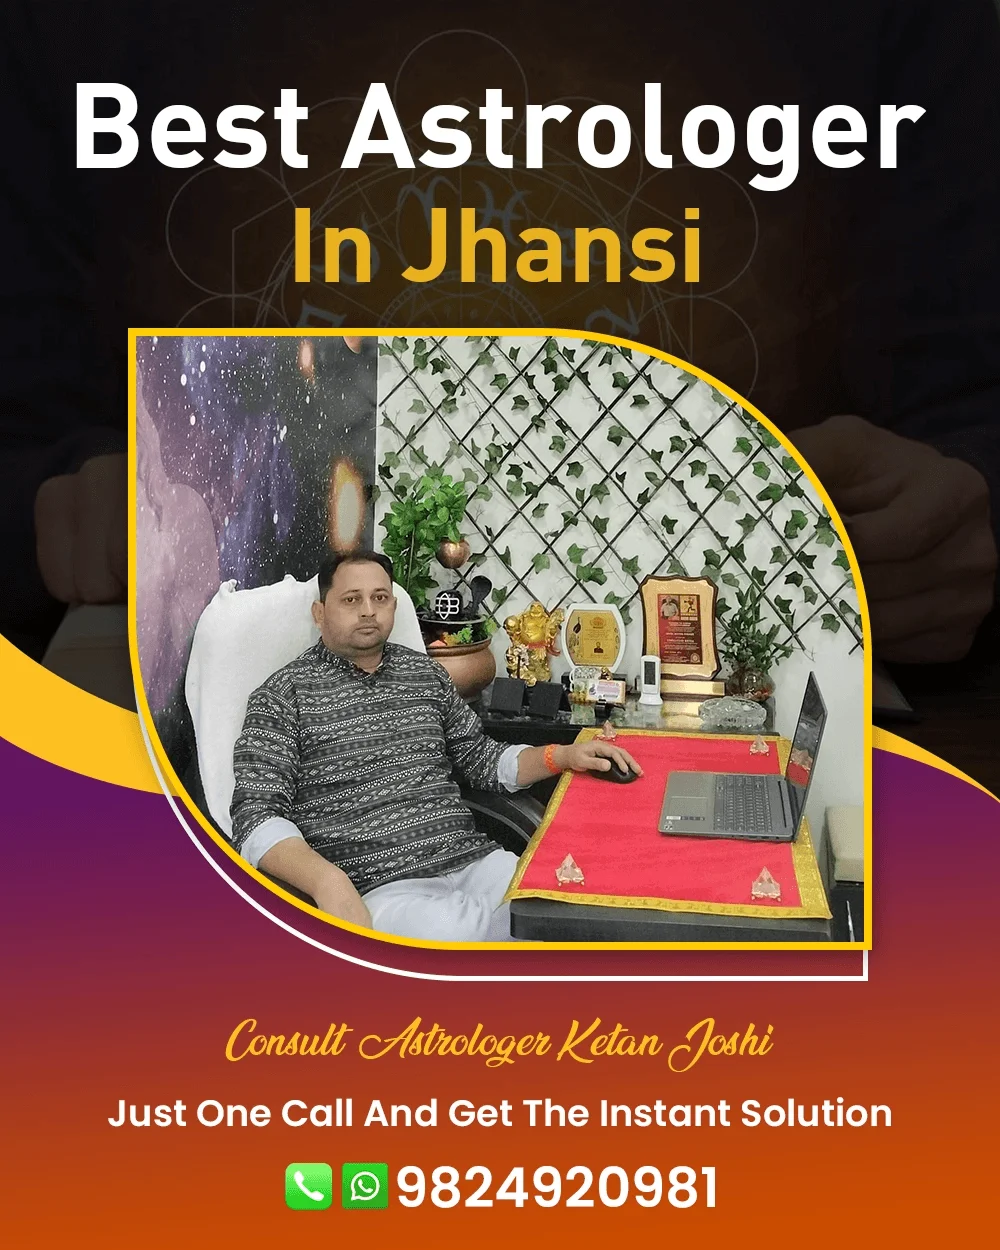 Best Astrologer In Jhansi